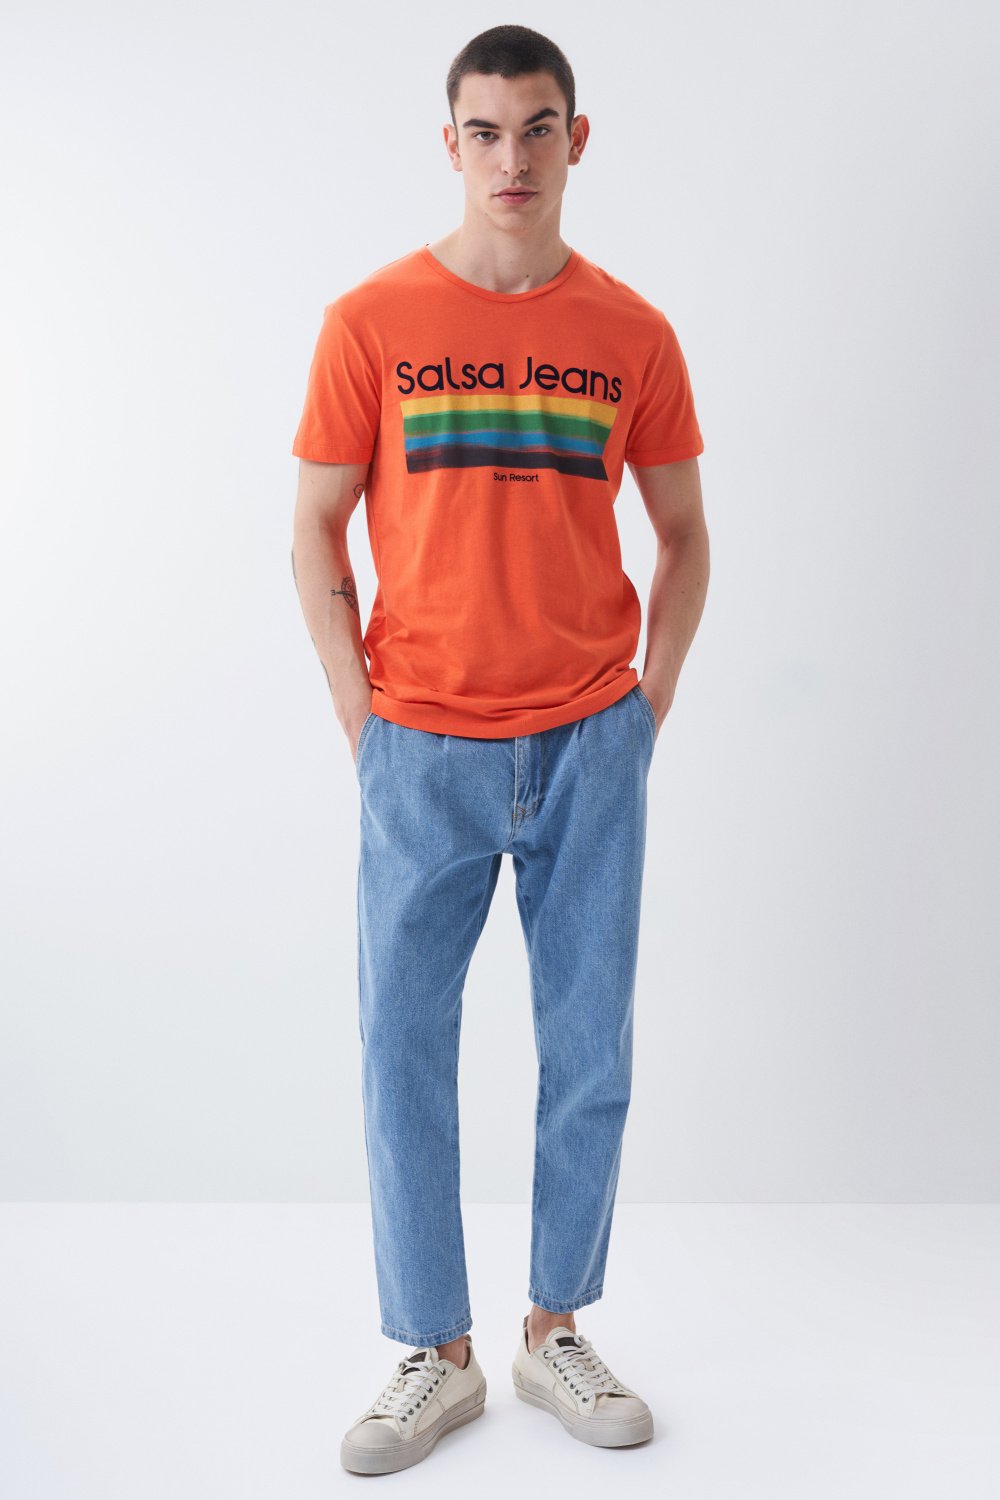 T-shirt with Salsa name and coloured horizontal stripes - Salsa